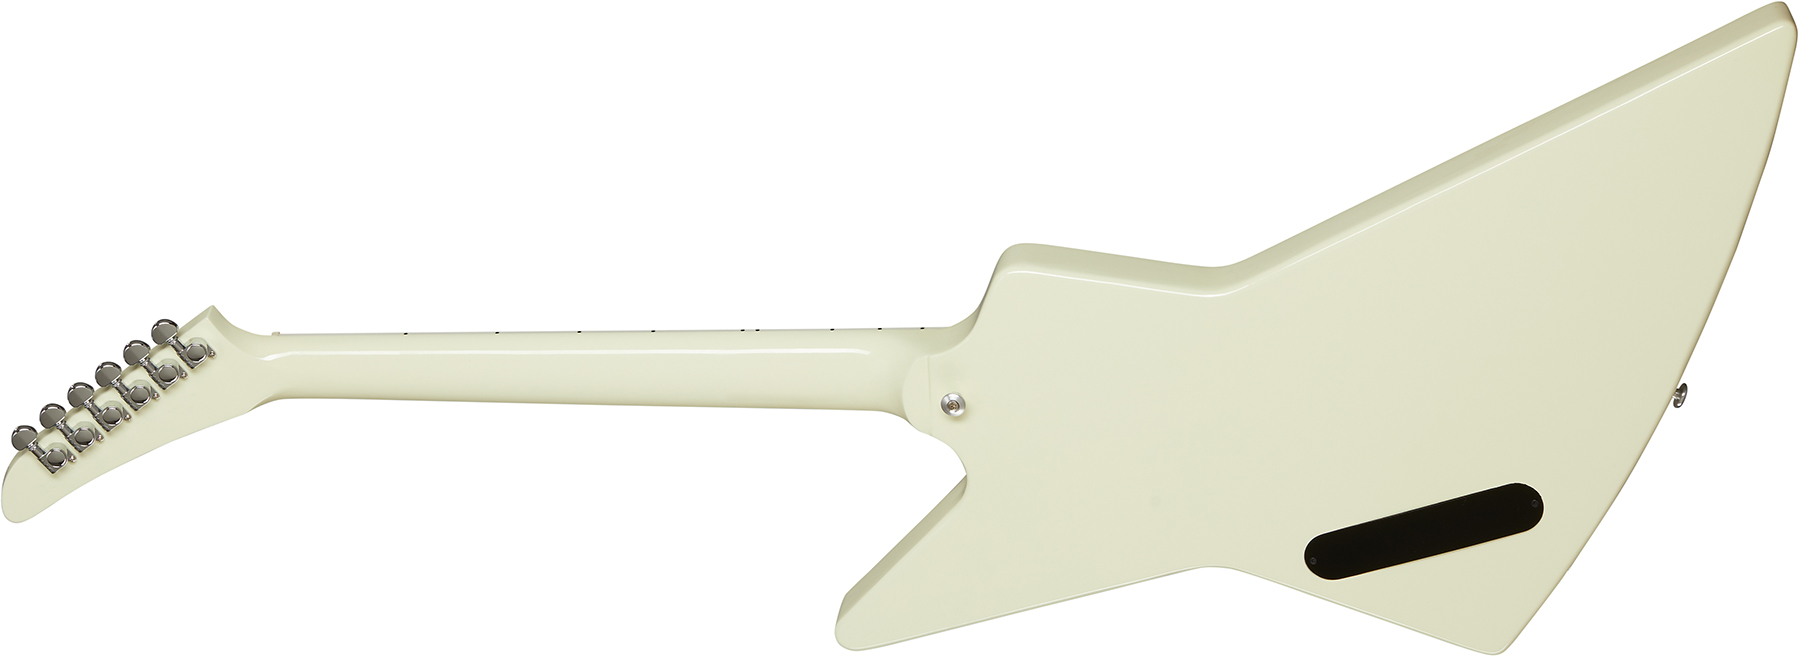 Gibson Explorer 70s Original Gaucher Hh Ht Rw - Classic White - Left-handed electric guitar - Variation 1